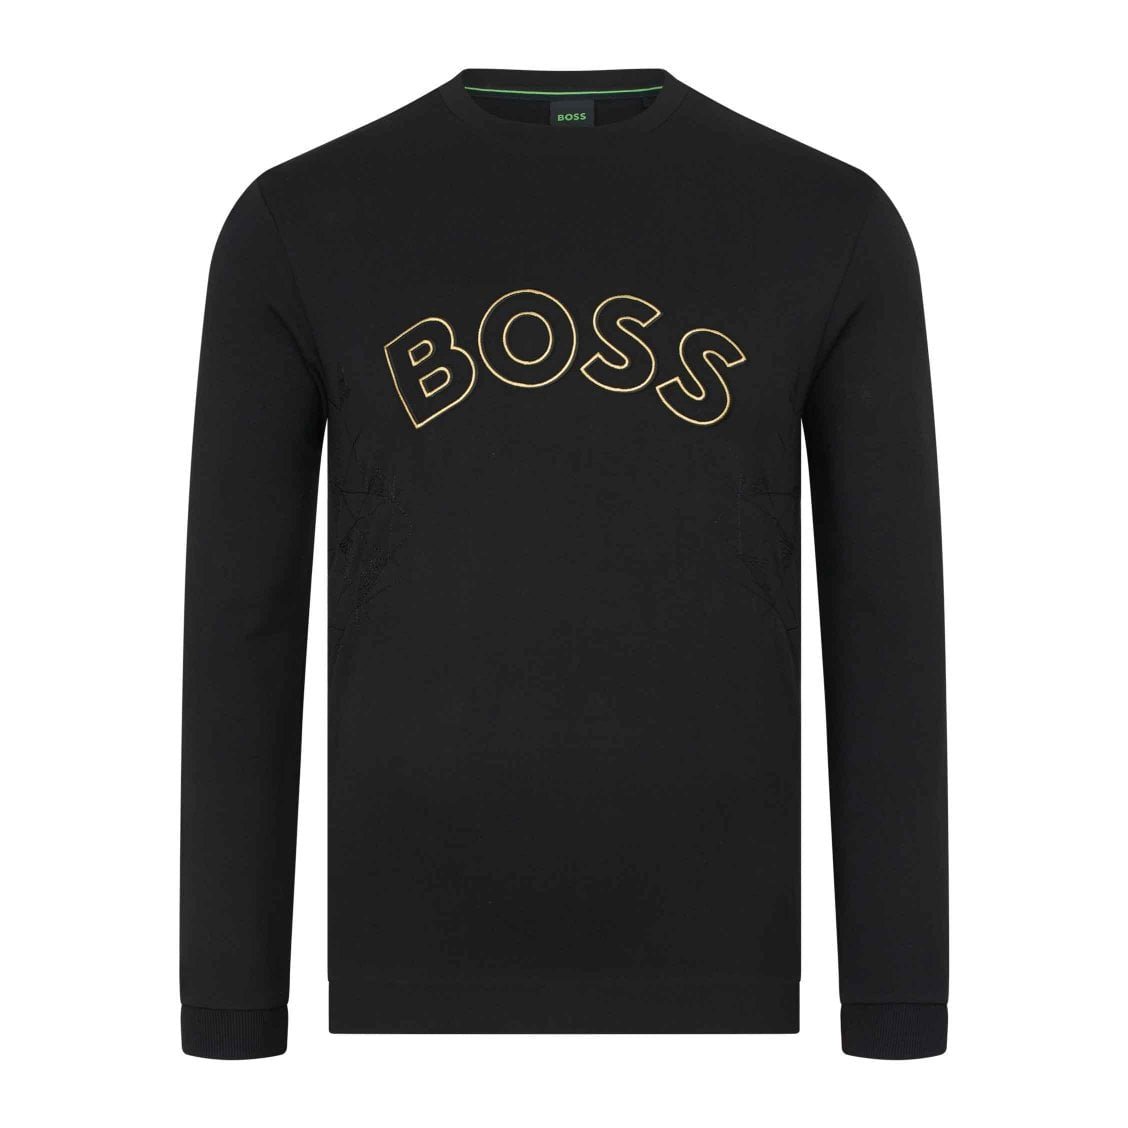 BOSS Green Salbo Iconic Sweatshirt - 001 Black - Escape Menswear